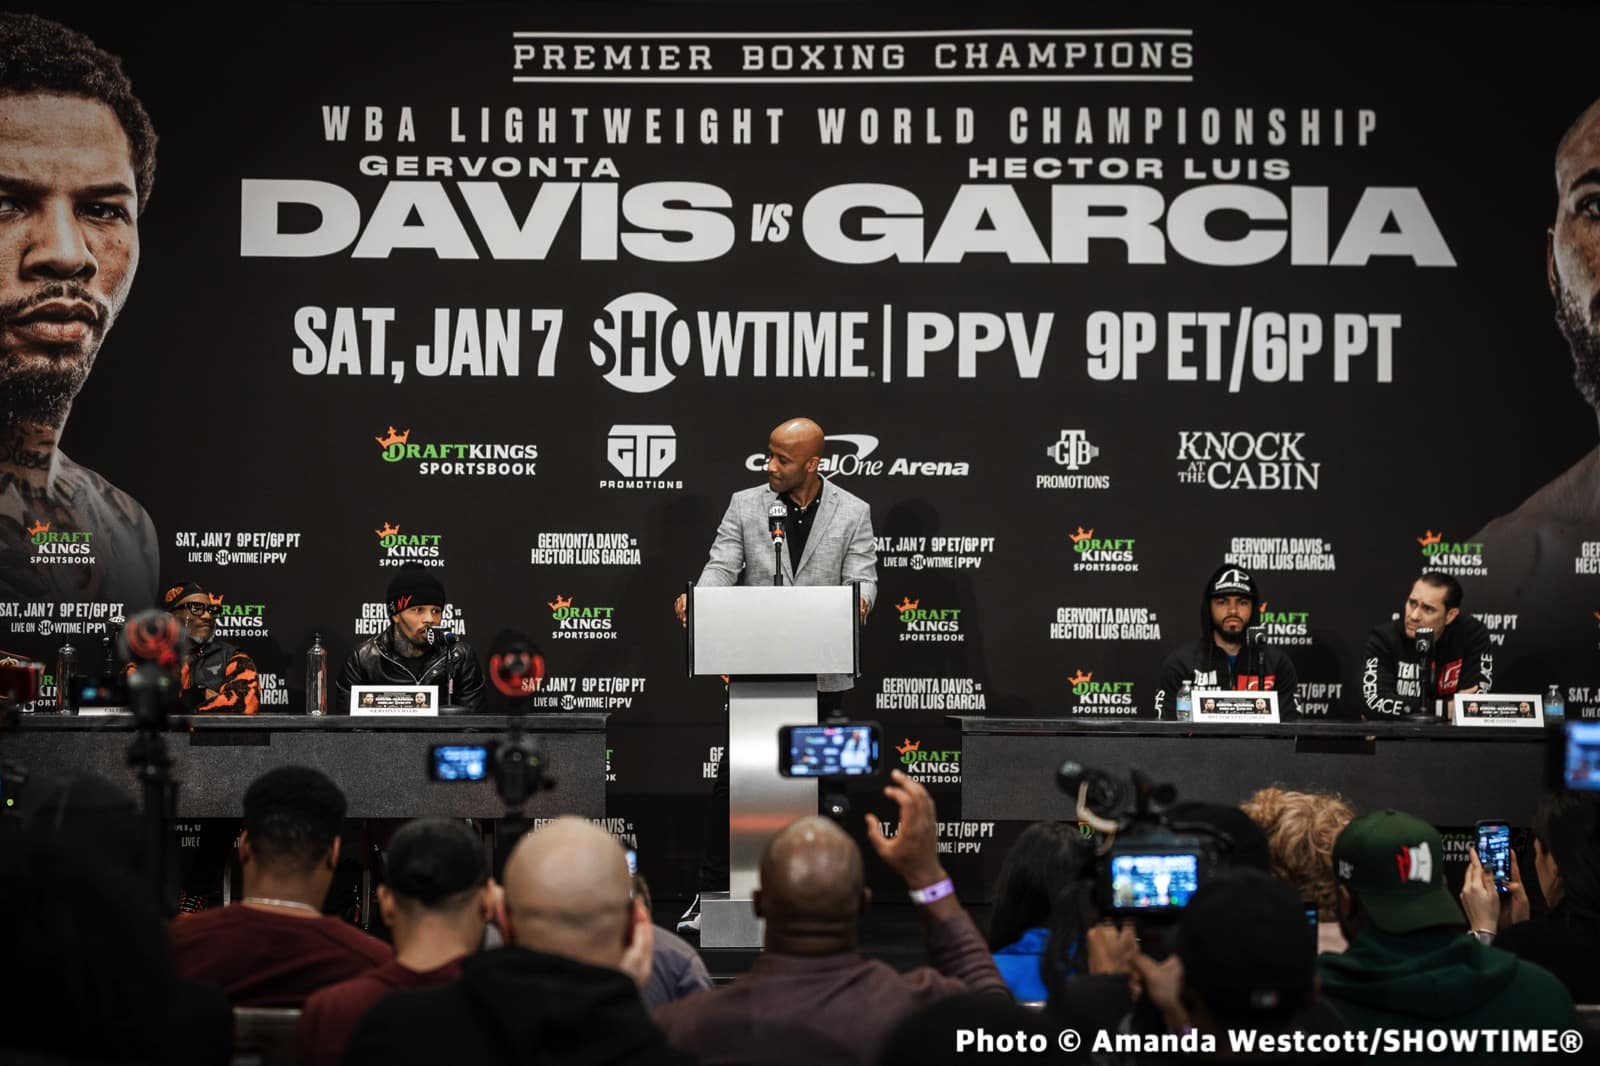 Davis vs Garcia final Showtime press conference quotes for Saturday's fight